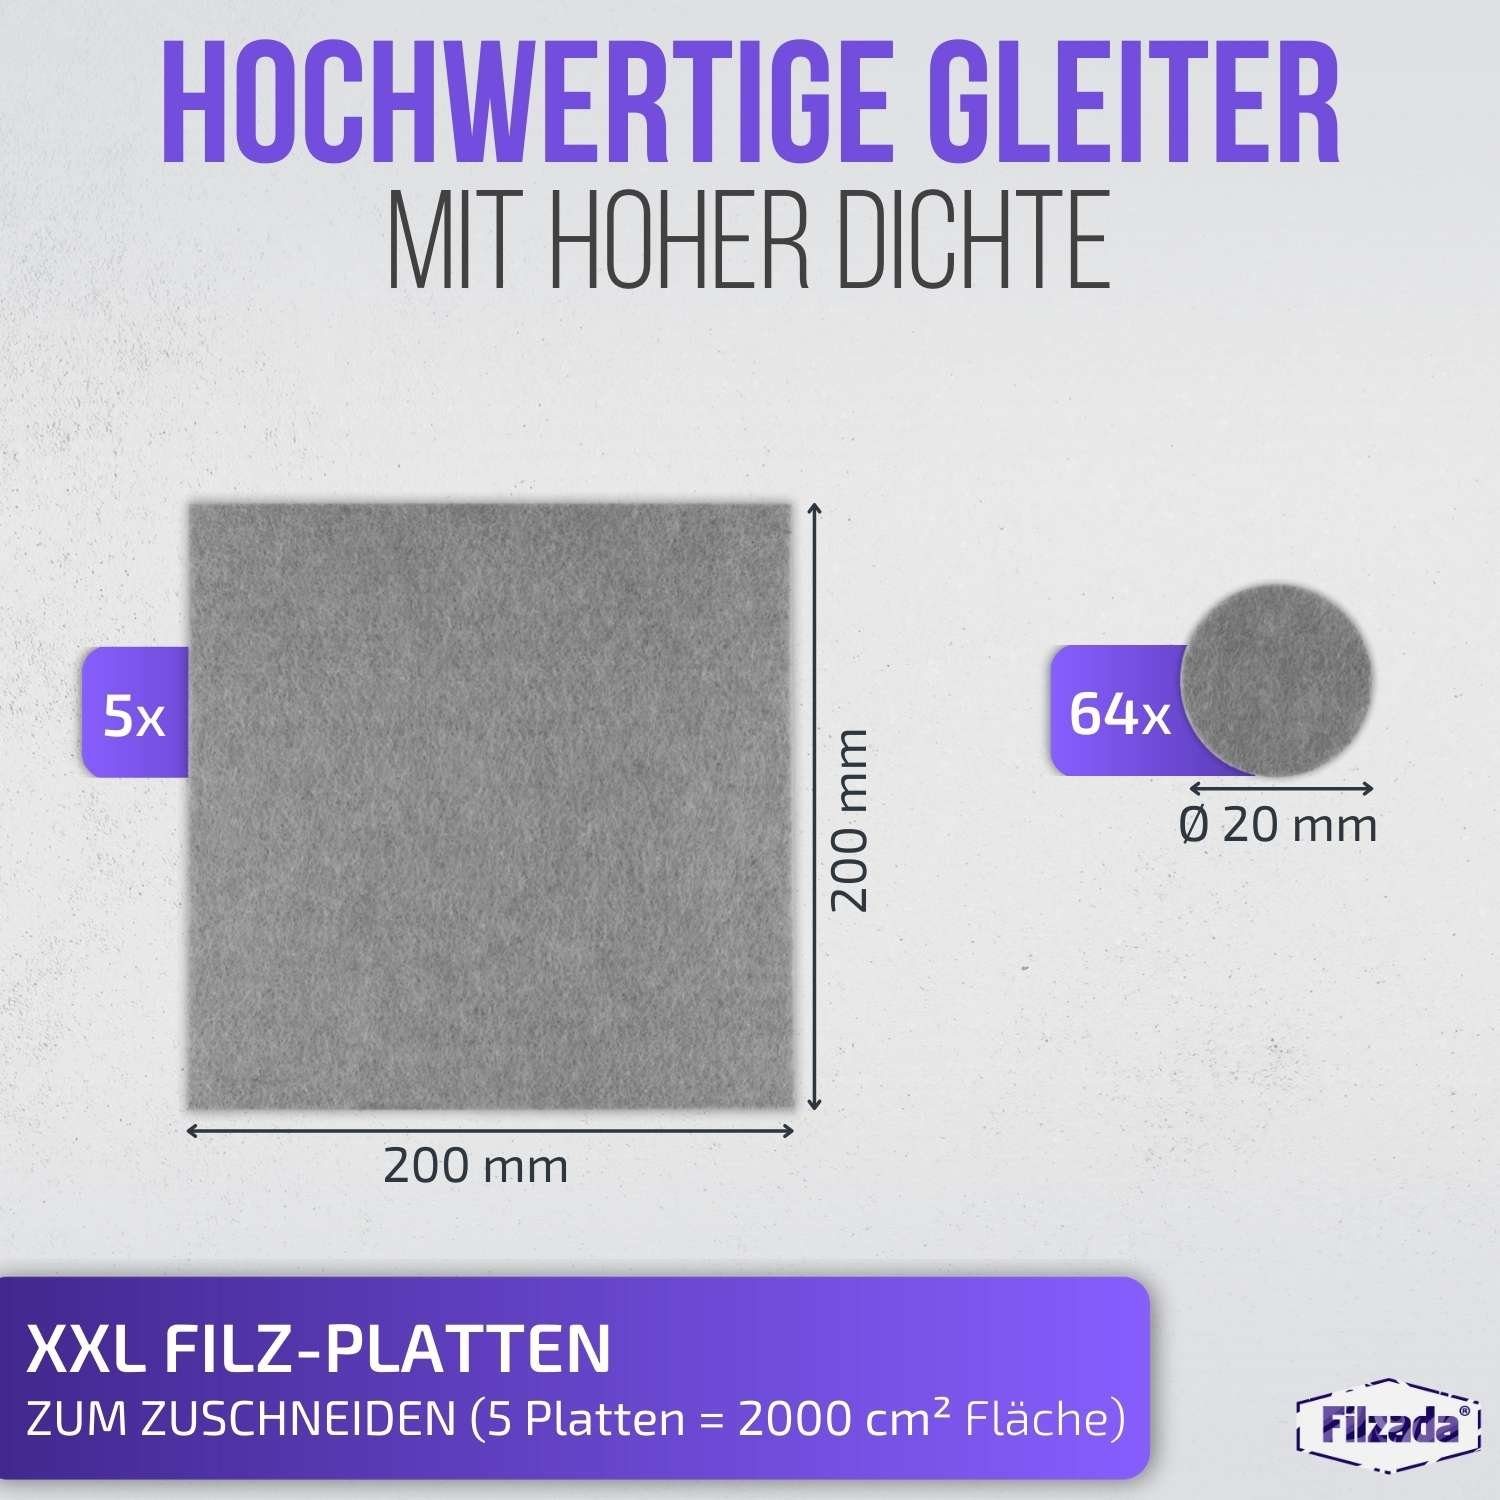 Filzada Filzgleiter Filzgleiter Selbstklebend Platten & Set Möbelgleiter Grau Ø20mm 200x200mm